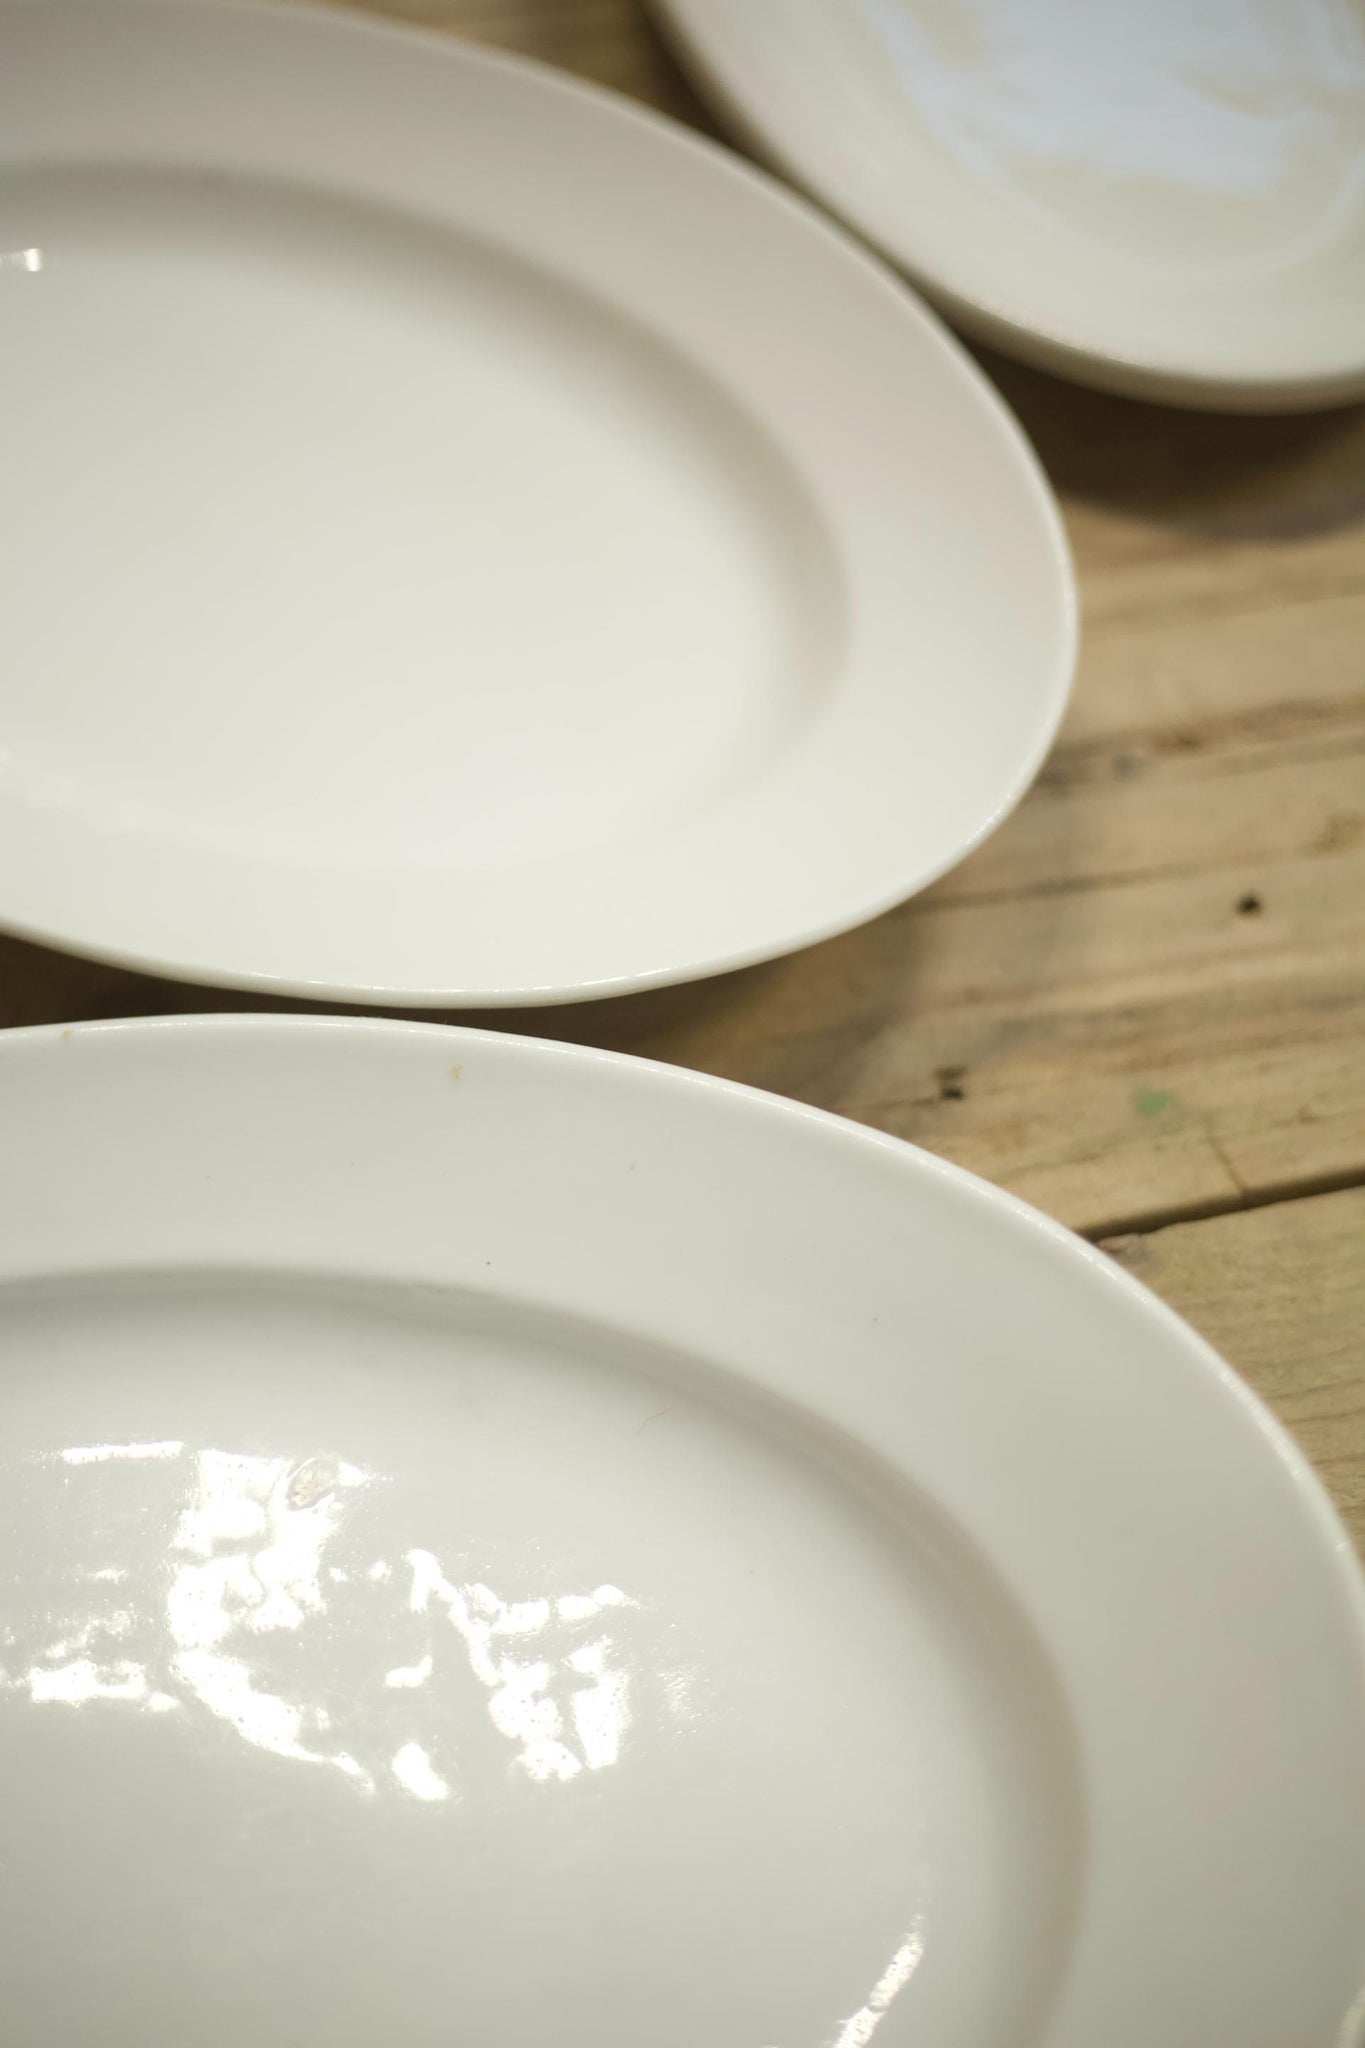 Vintage Graduated trio of white porcelain serving plates